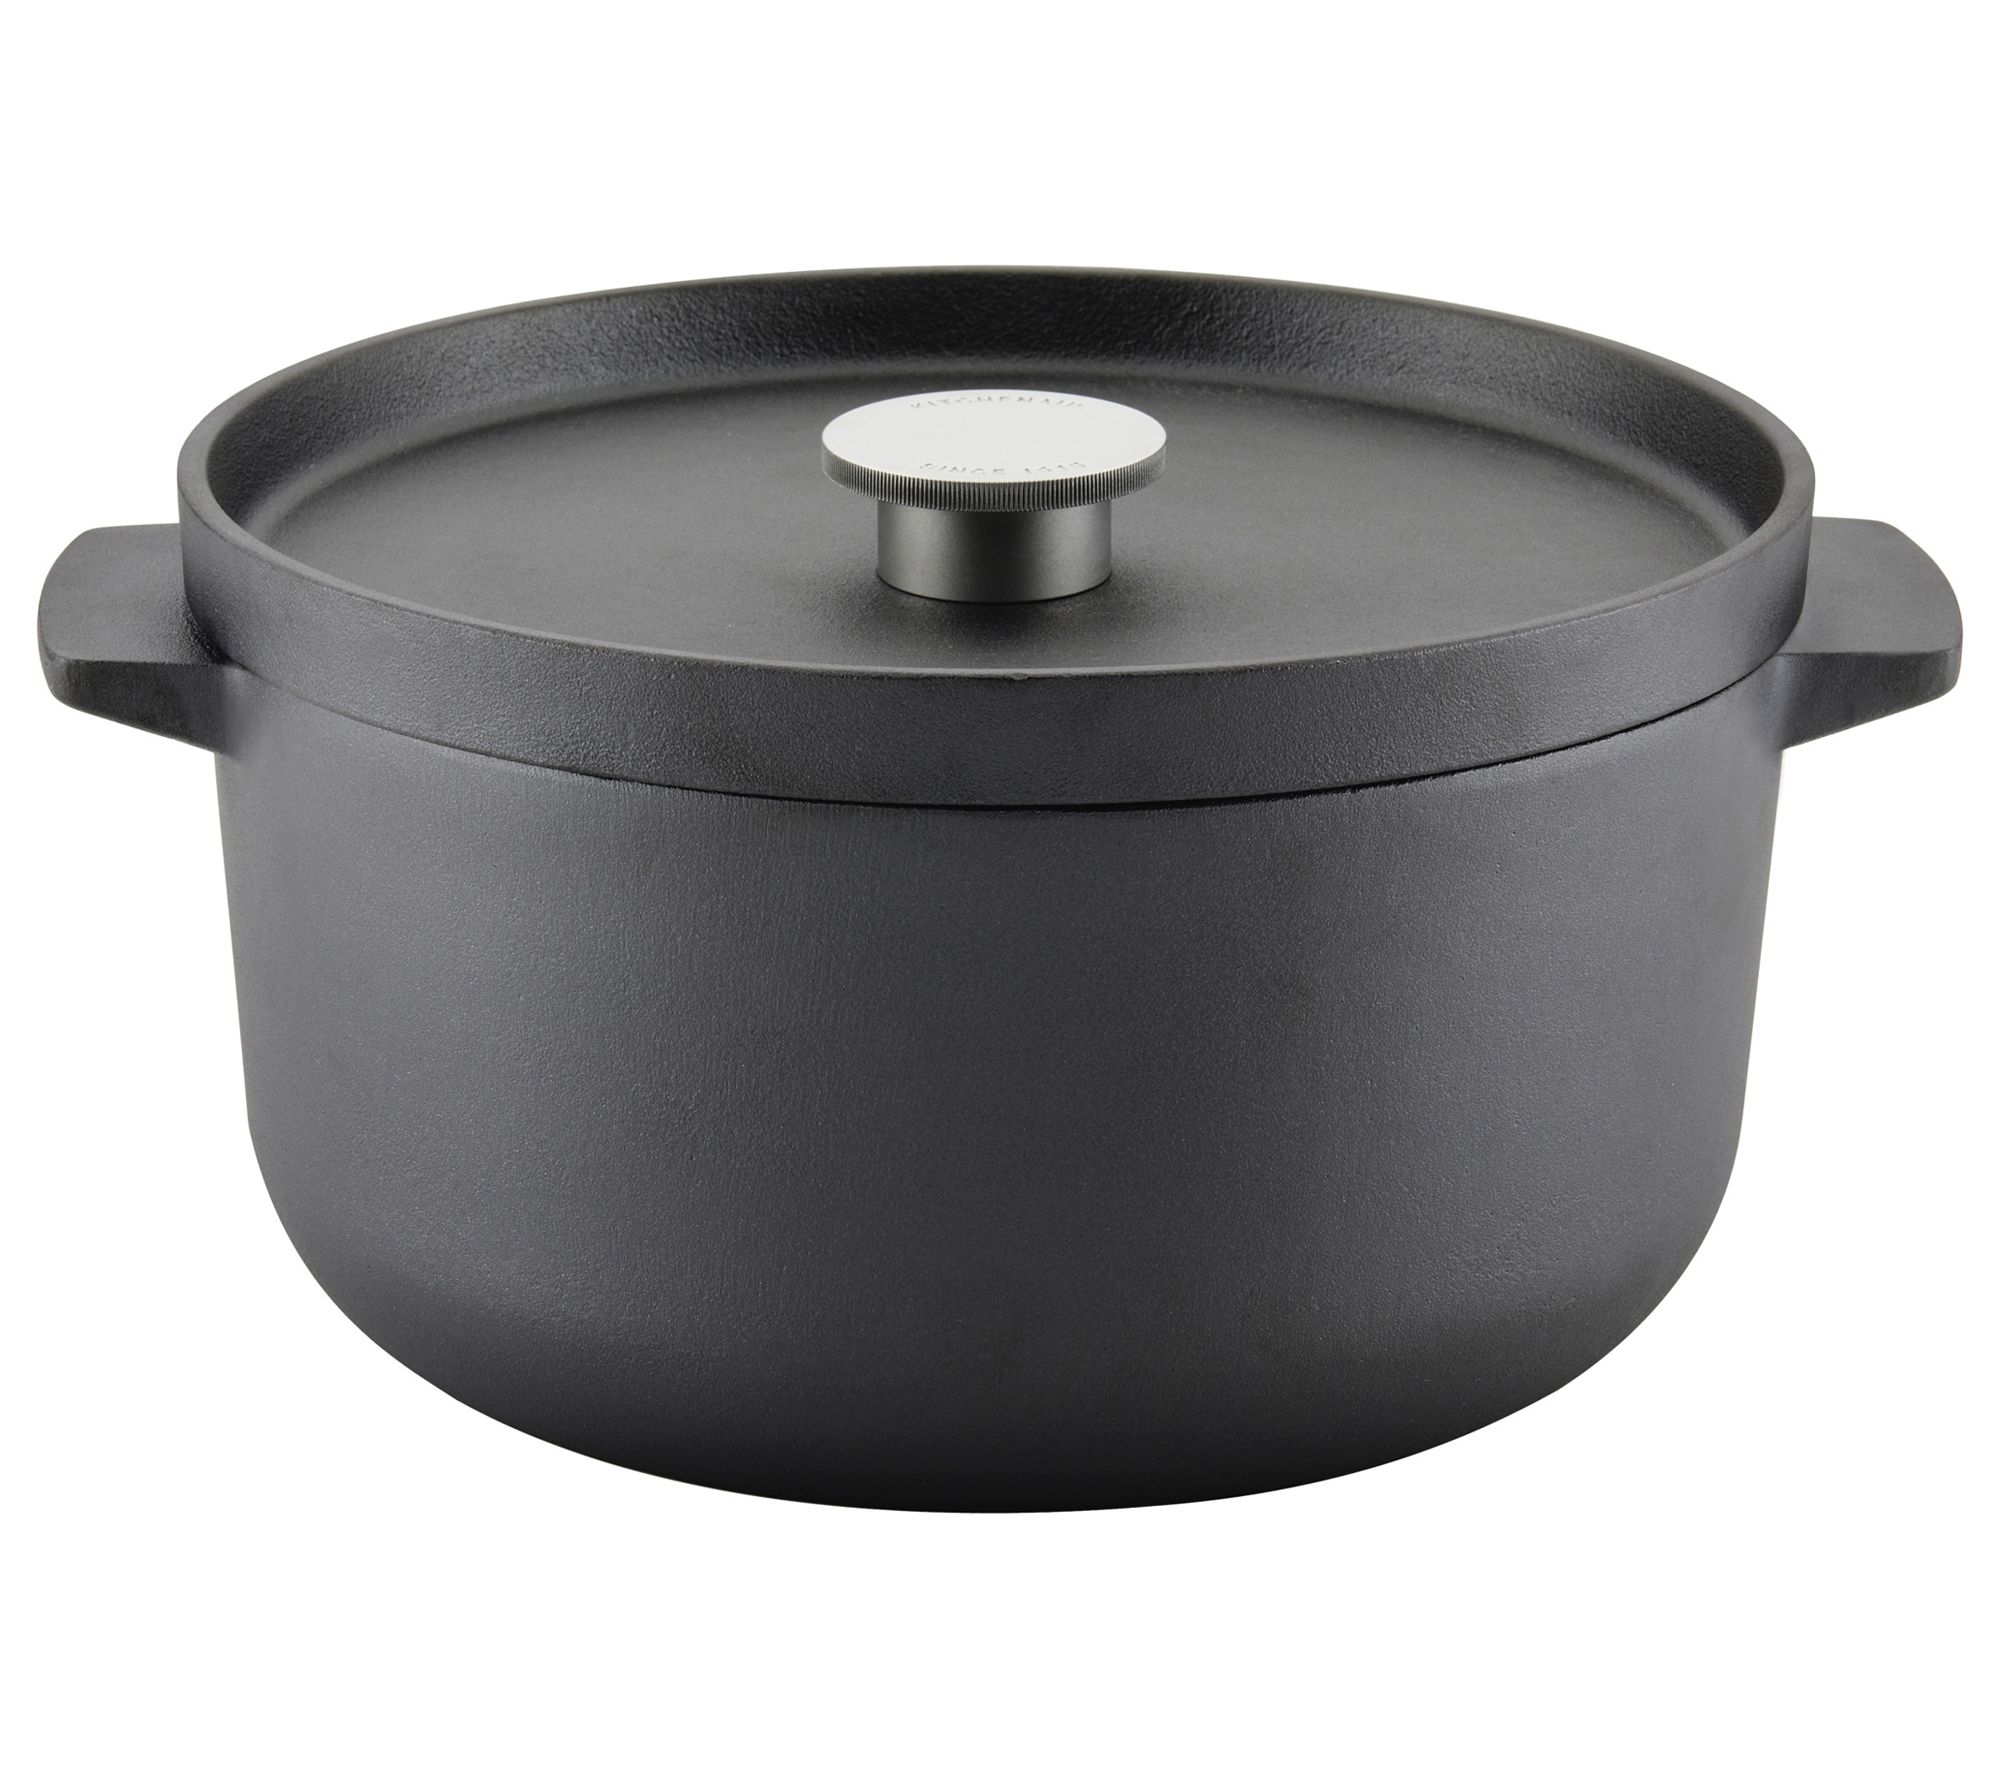 Crock-Pot Artisan Oval Enameled Cast Iron Dutch Oven, 7-Quart, Slate Gray